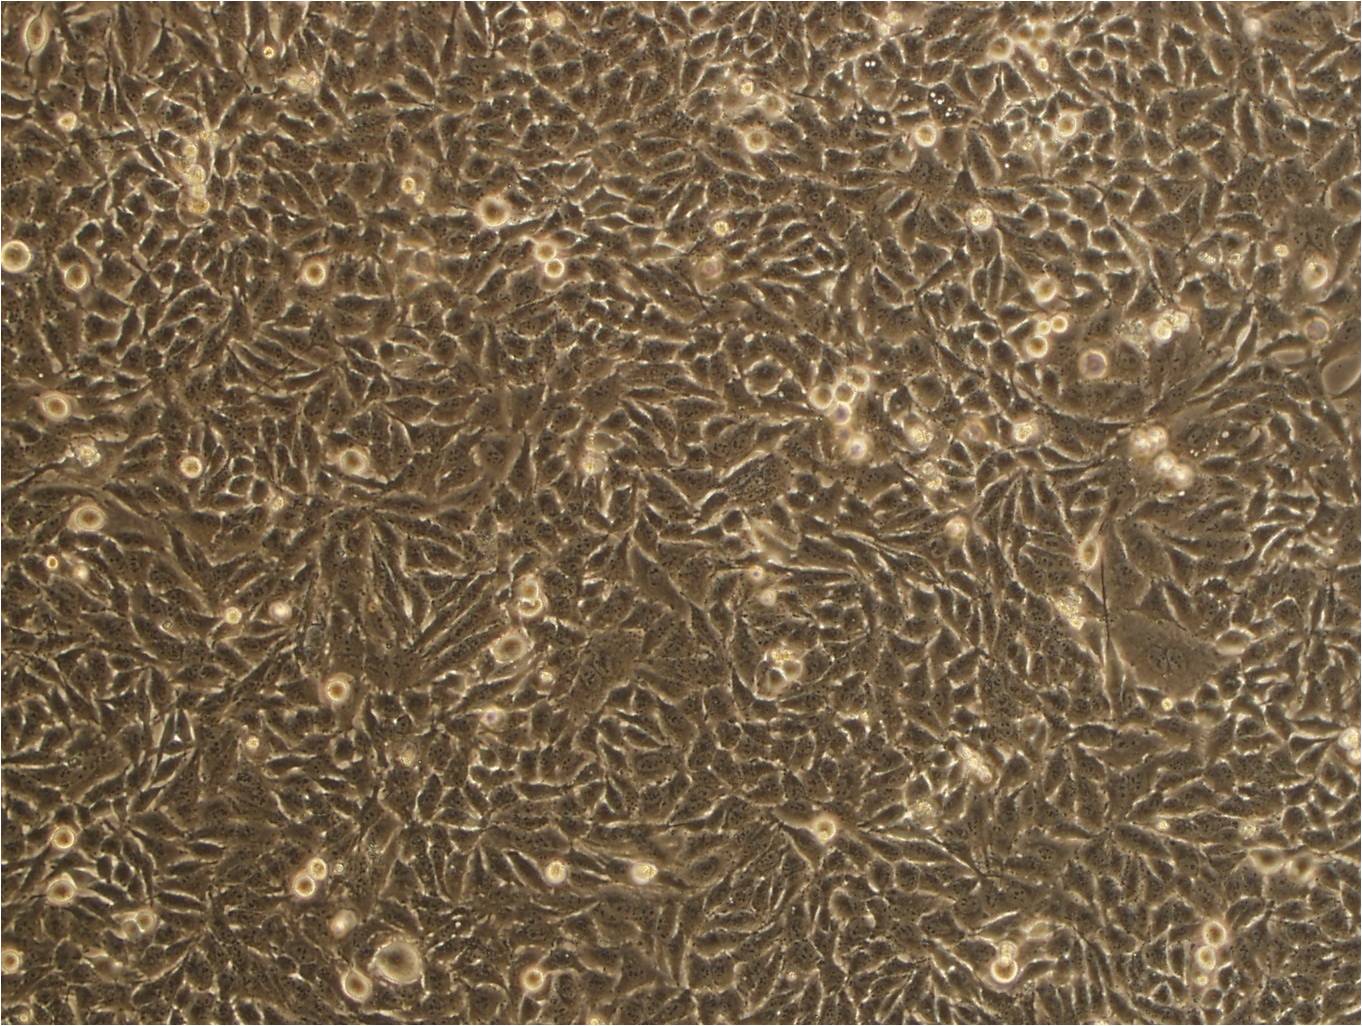 OVTOKO Cells(赠送Str鉴定报告)|人卵巢透明细胞癌细胞